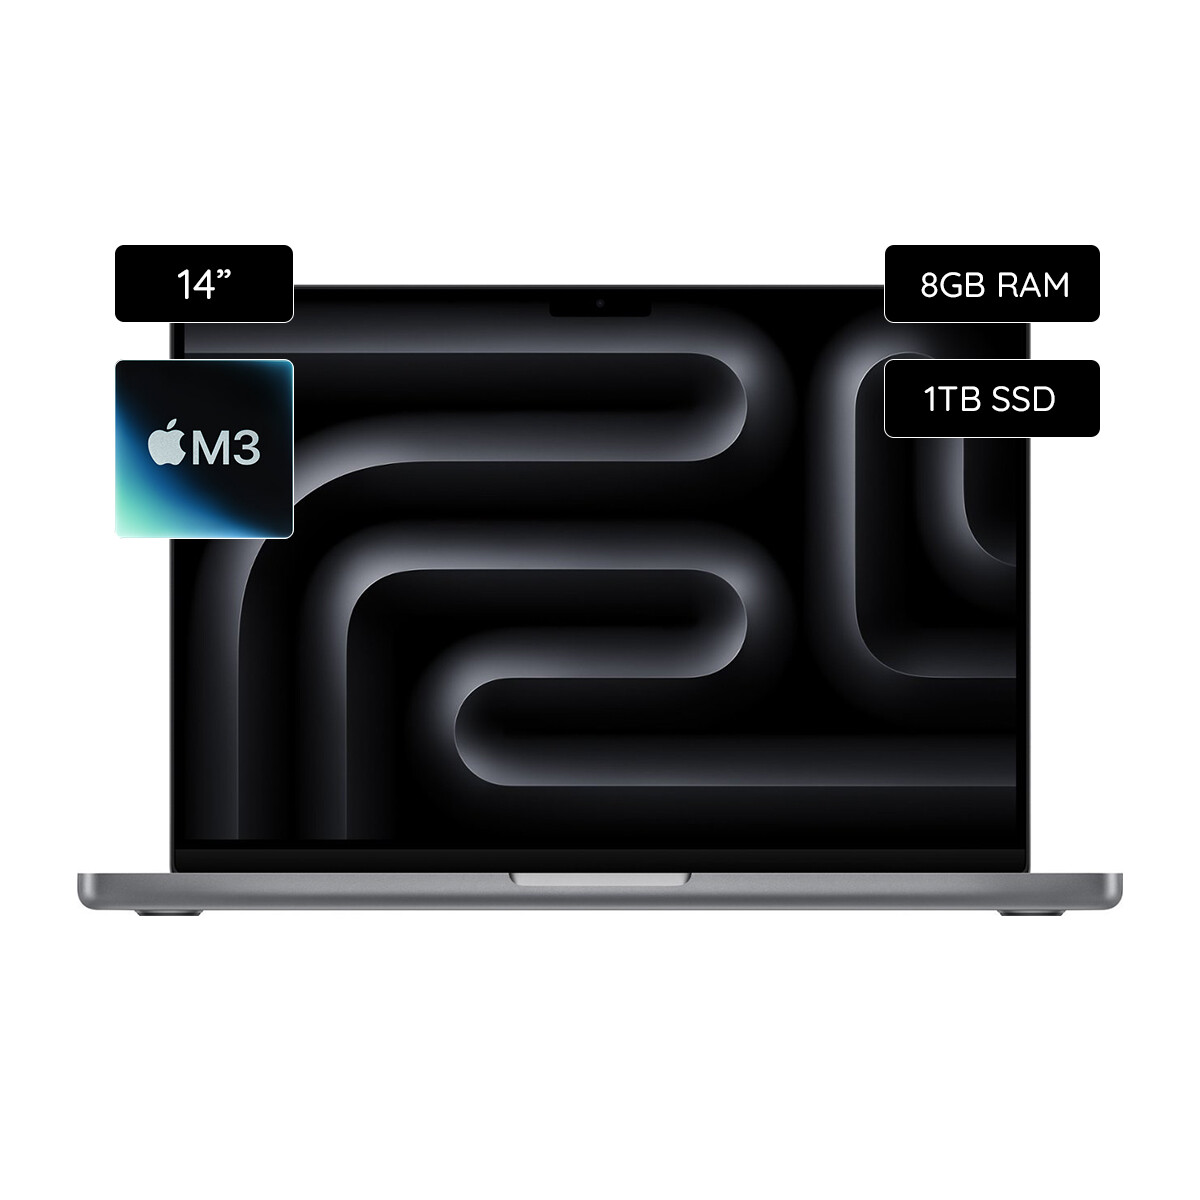 Apple MacBook Pro 14" Chip M3 1TB SSD | 8GB RAM | Inglés - Space gray 